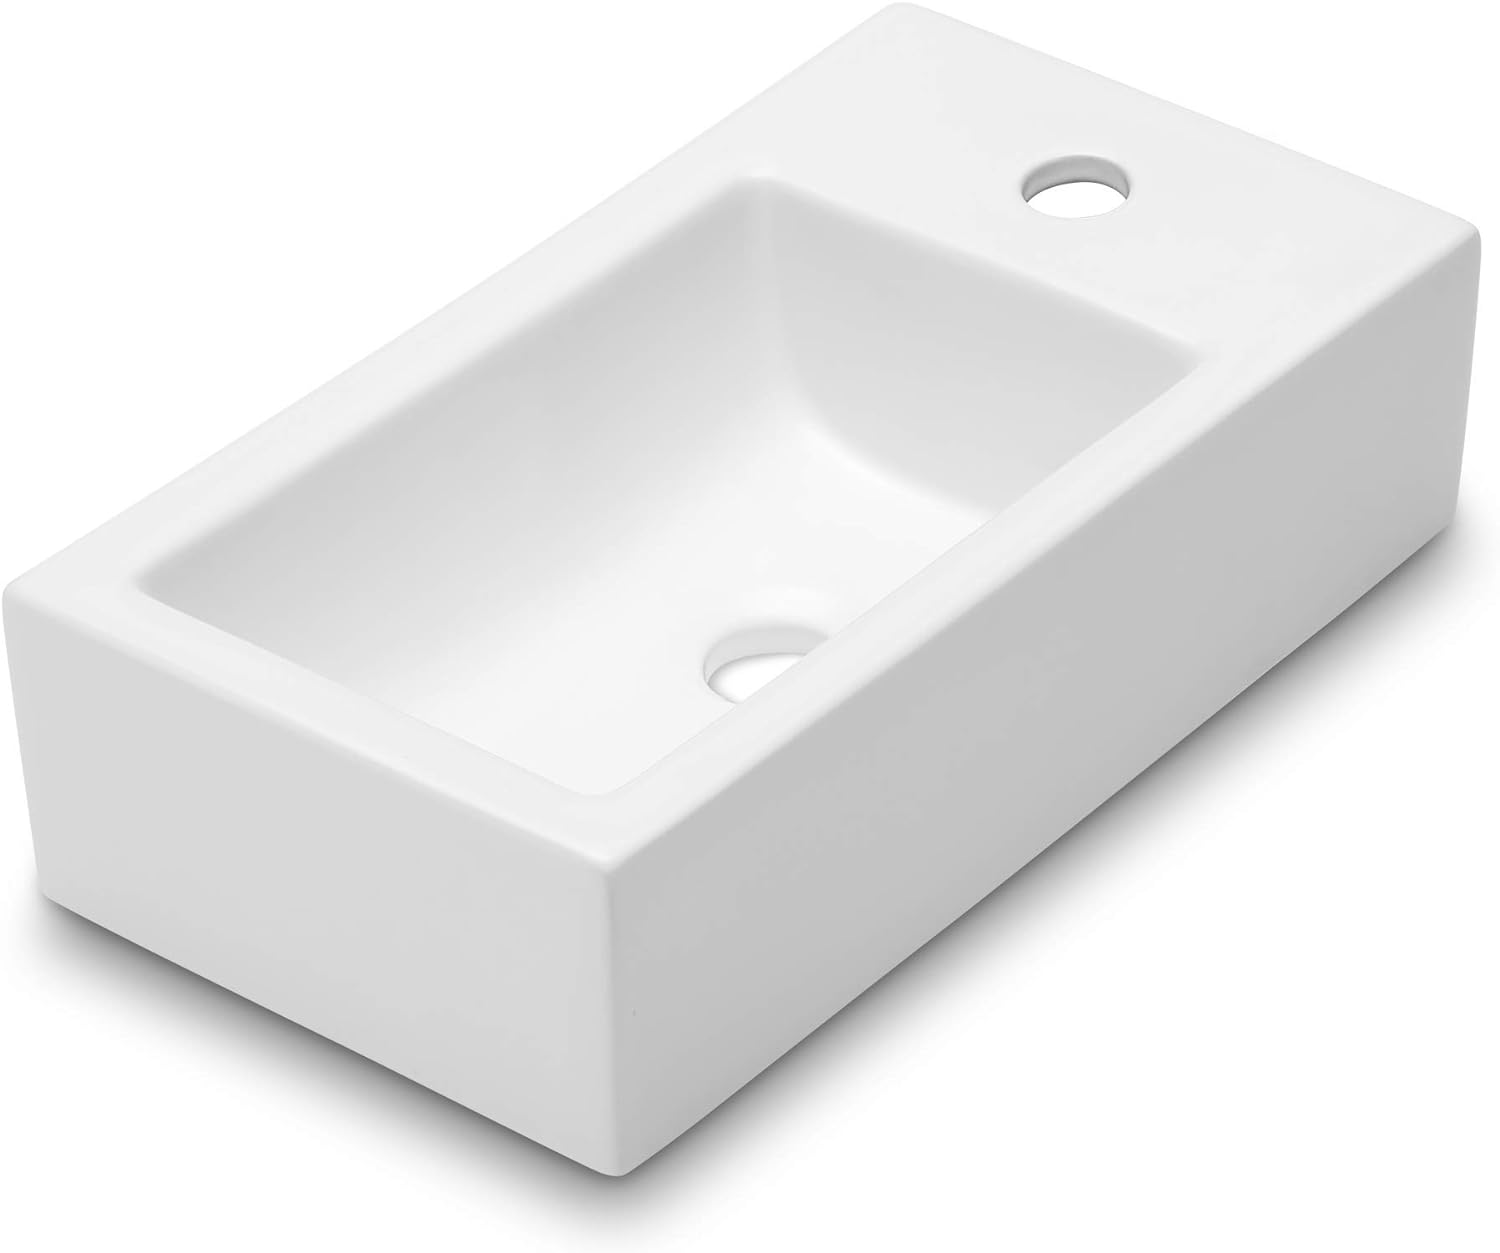 Lofeyo Floating Bathroom Sink Wall Mounted -  Modern Bathroom Vessel Sink Corner Mounted White Ceramic Porcelain Mini Small Rectangula